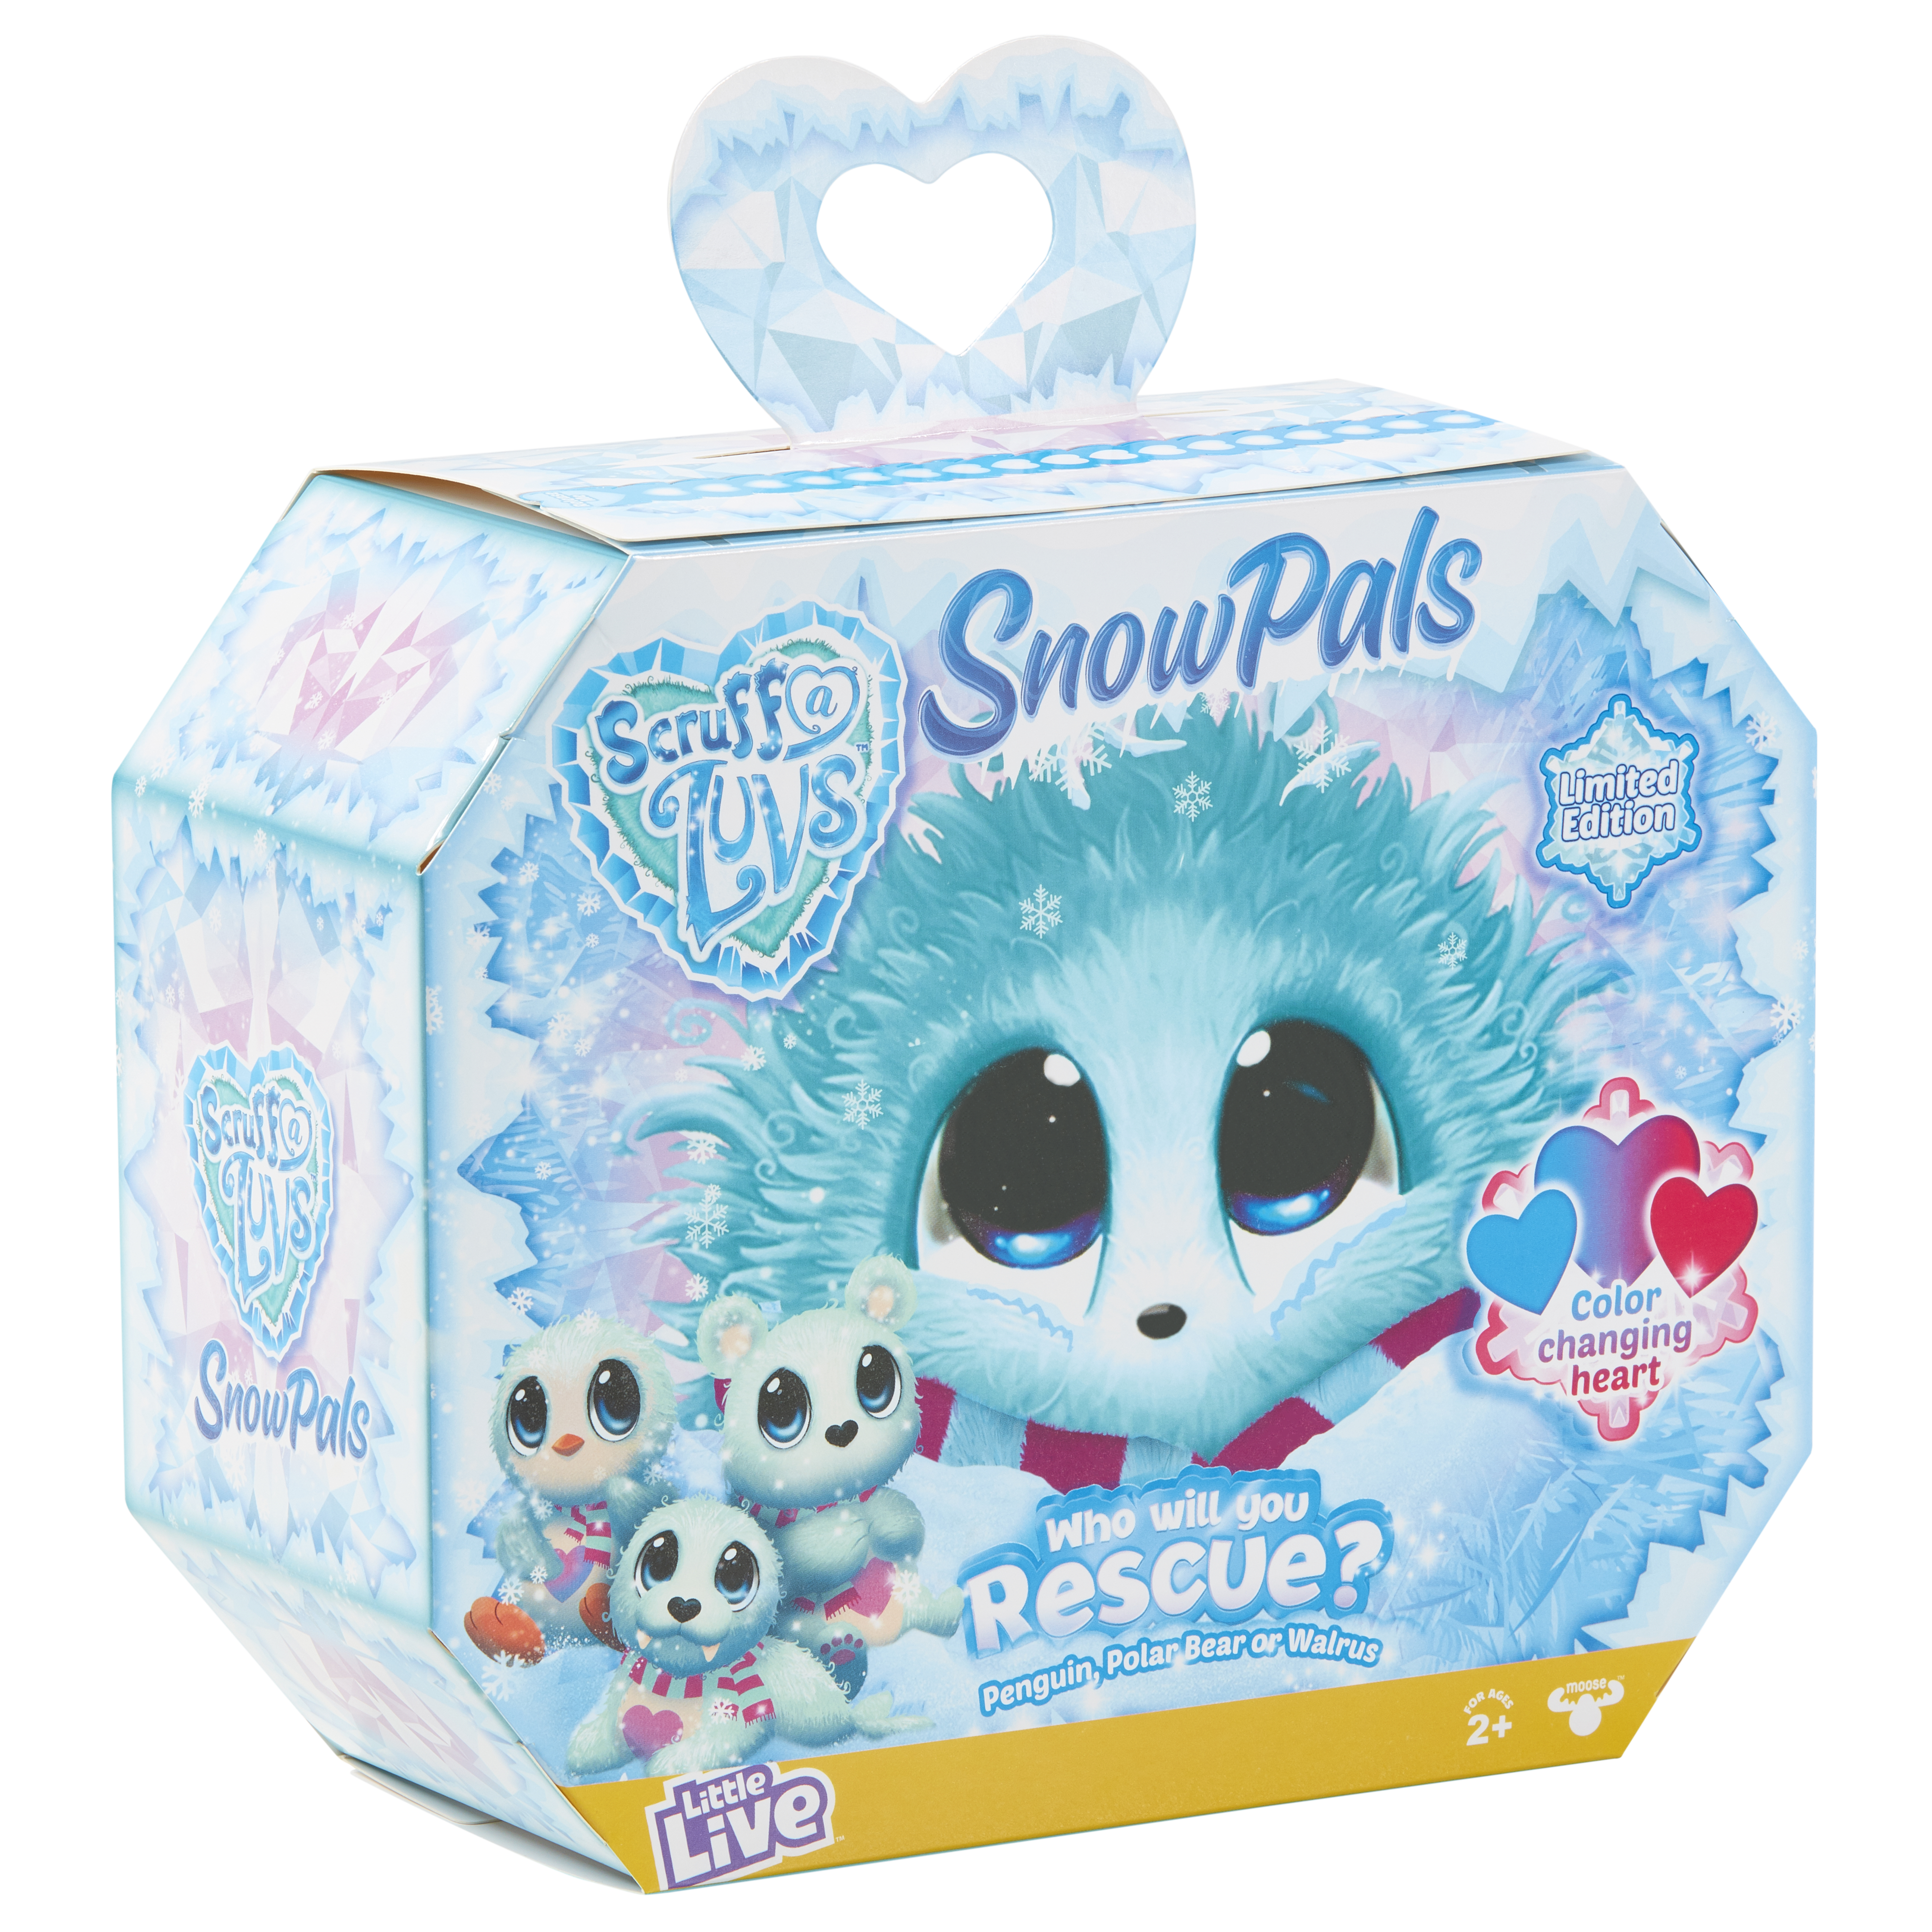 Scruff-a-luvs  - Snowball limited edition (30100)